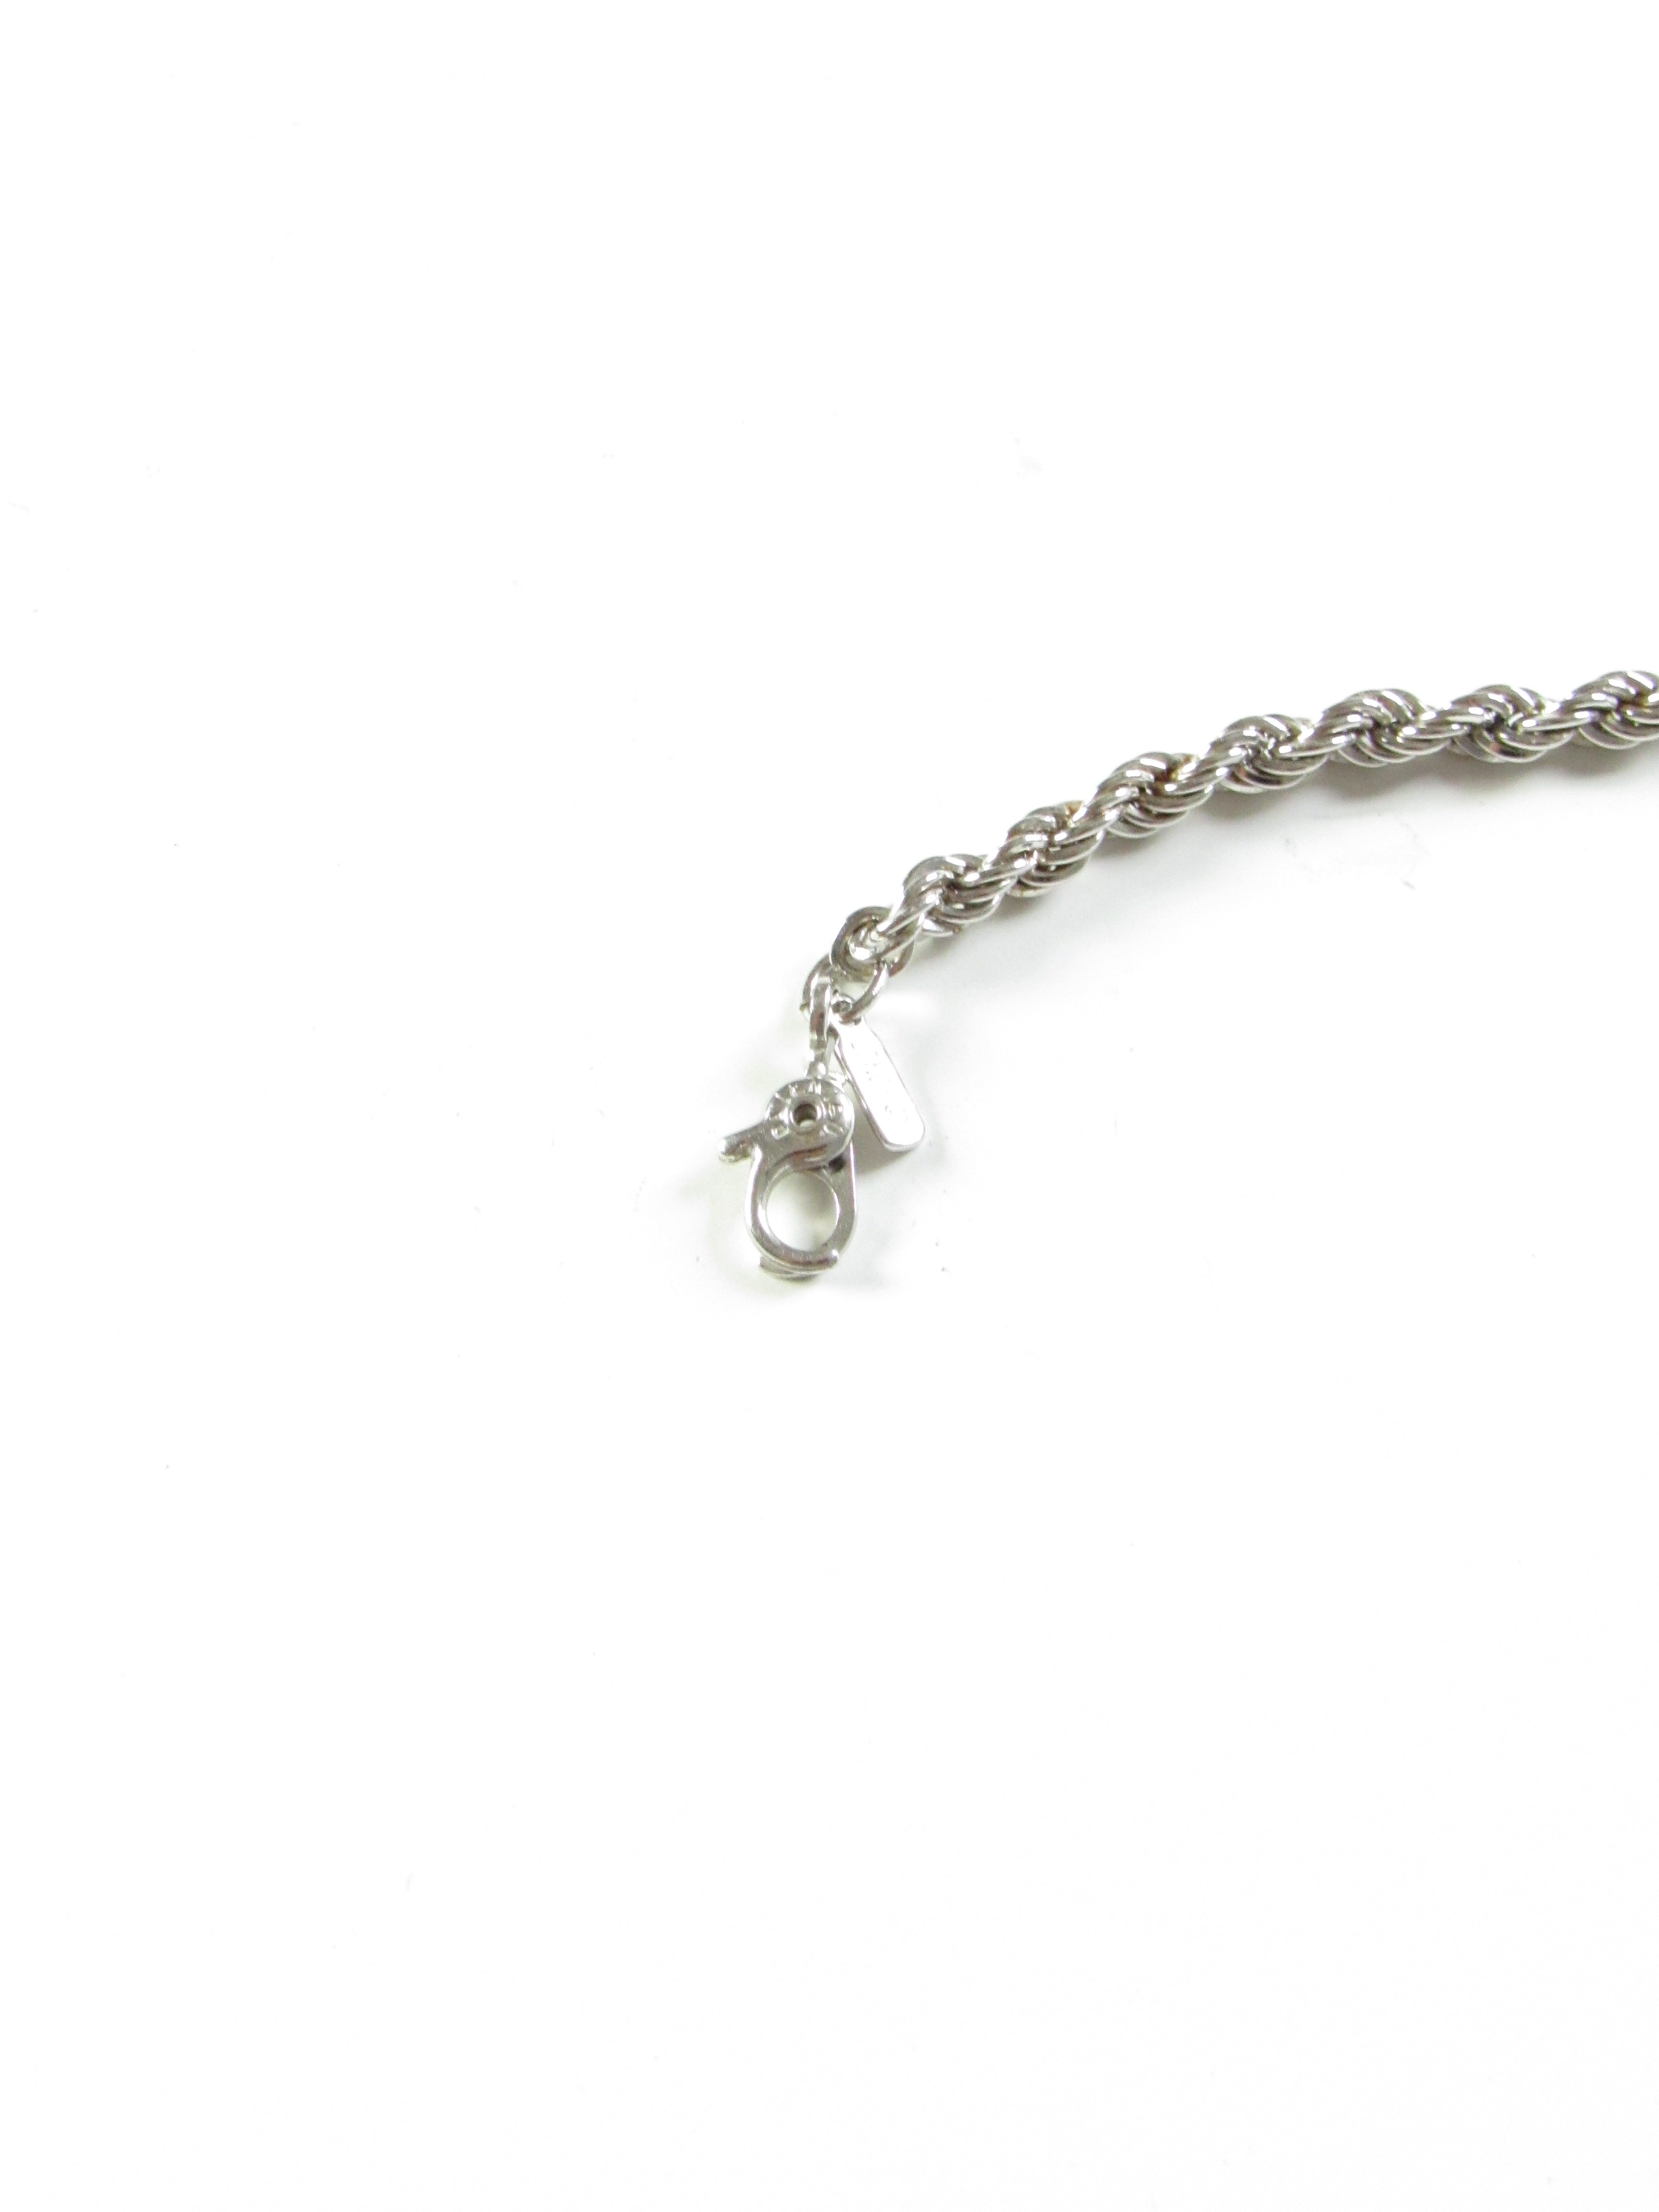 Monet Rope Chain Silver Bracelet